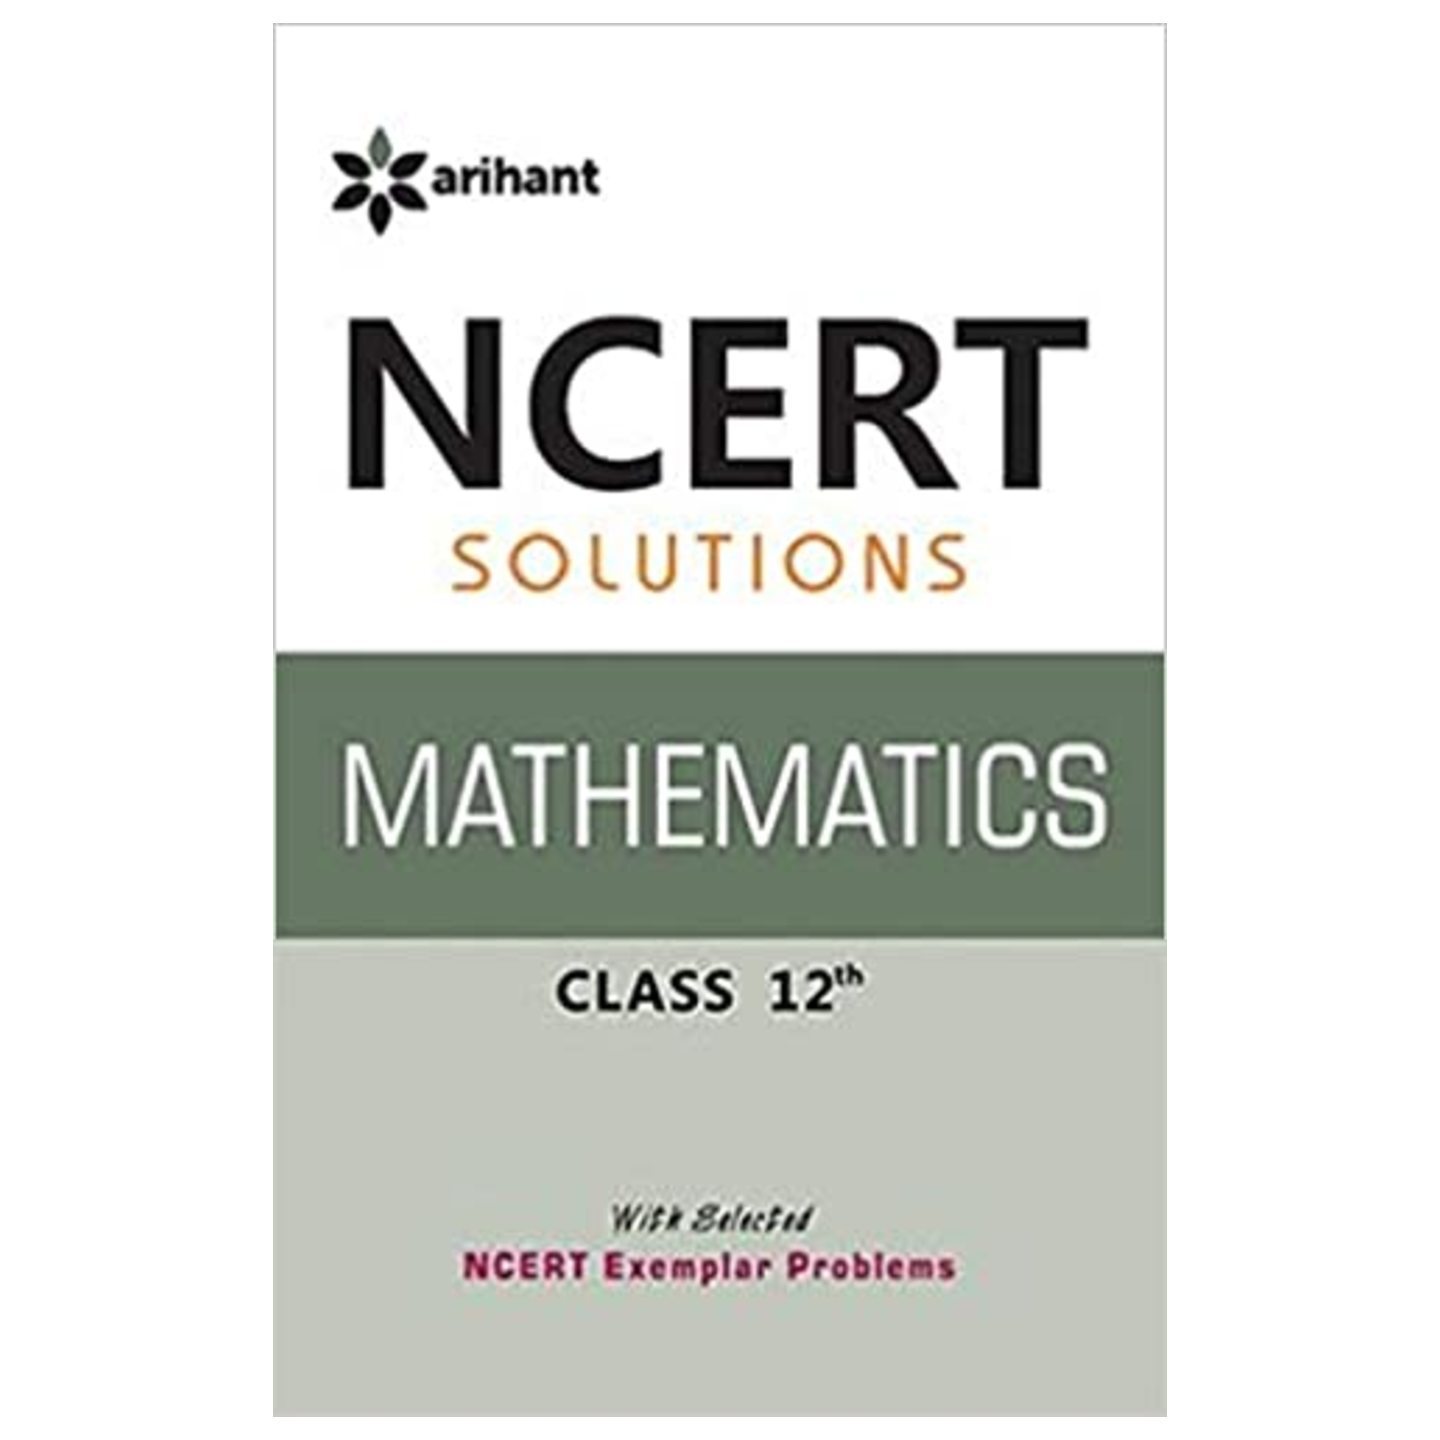 NCERT Solutions Mathematics 12th ARIHANT